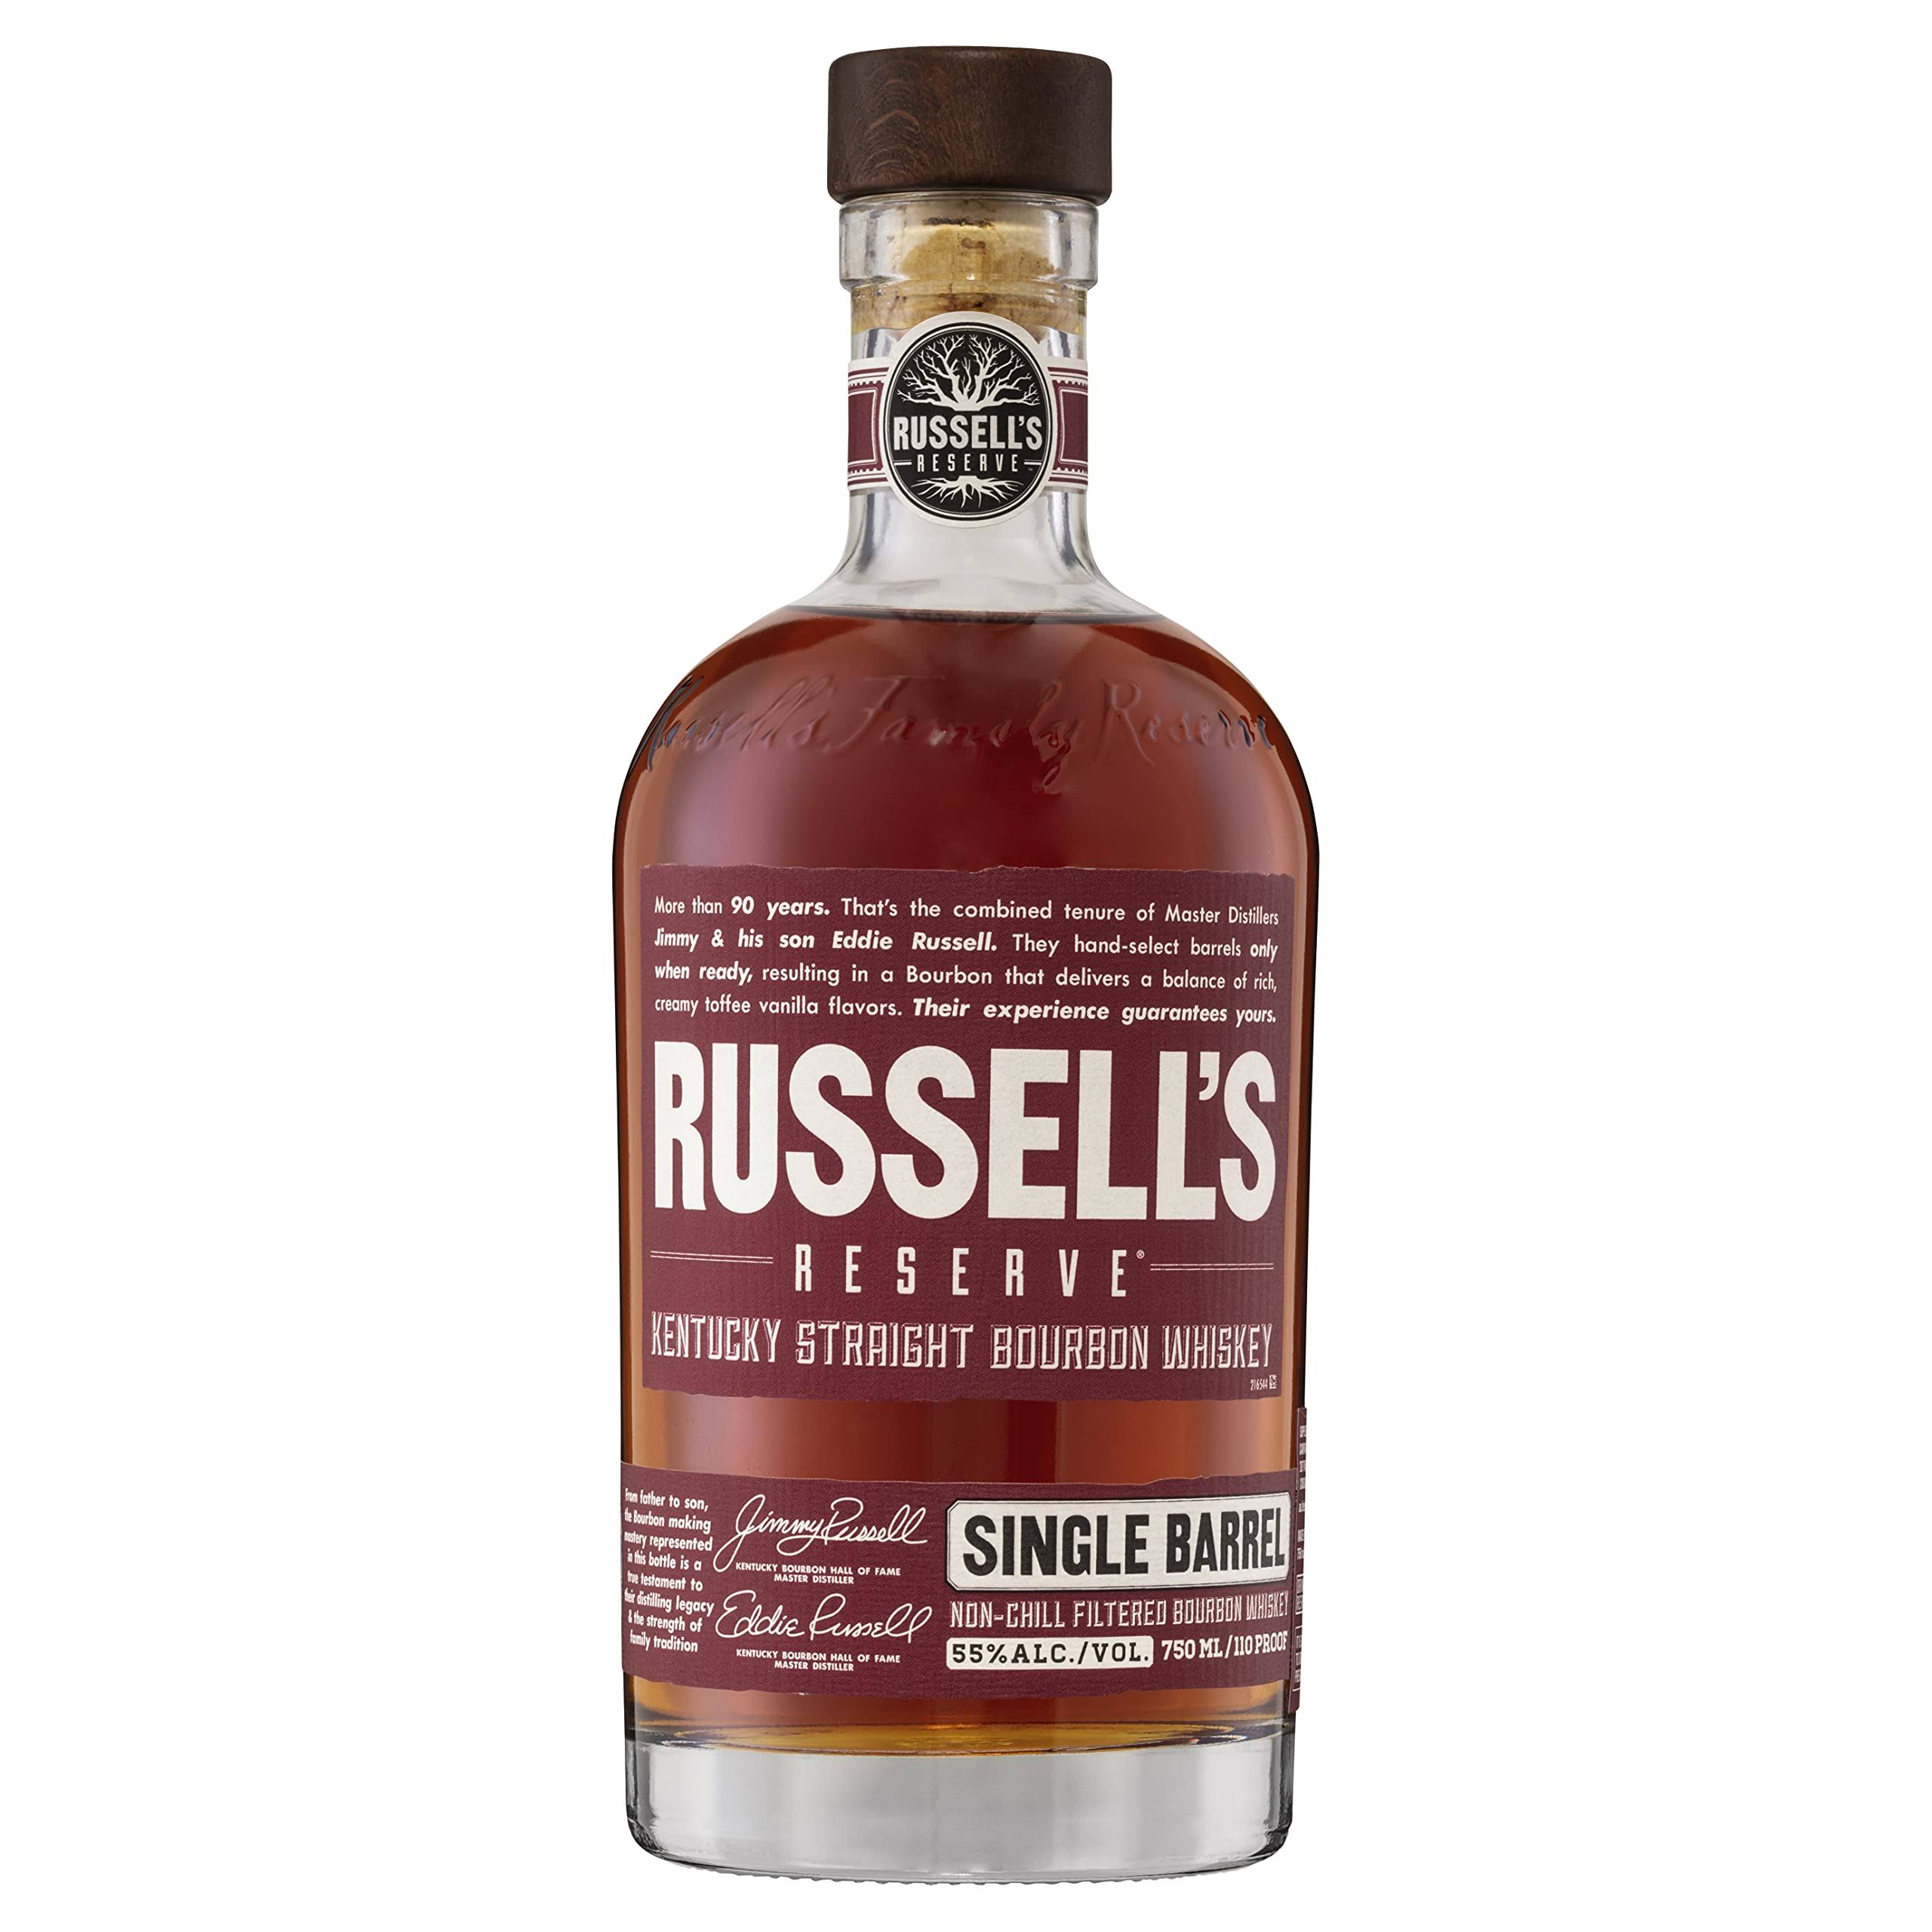 Russell's Reserve Small Batch Single Barrel Kentucky Straight Bourbon Whiskey